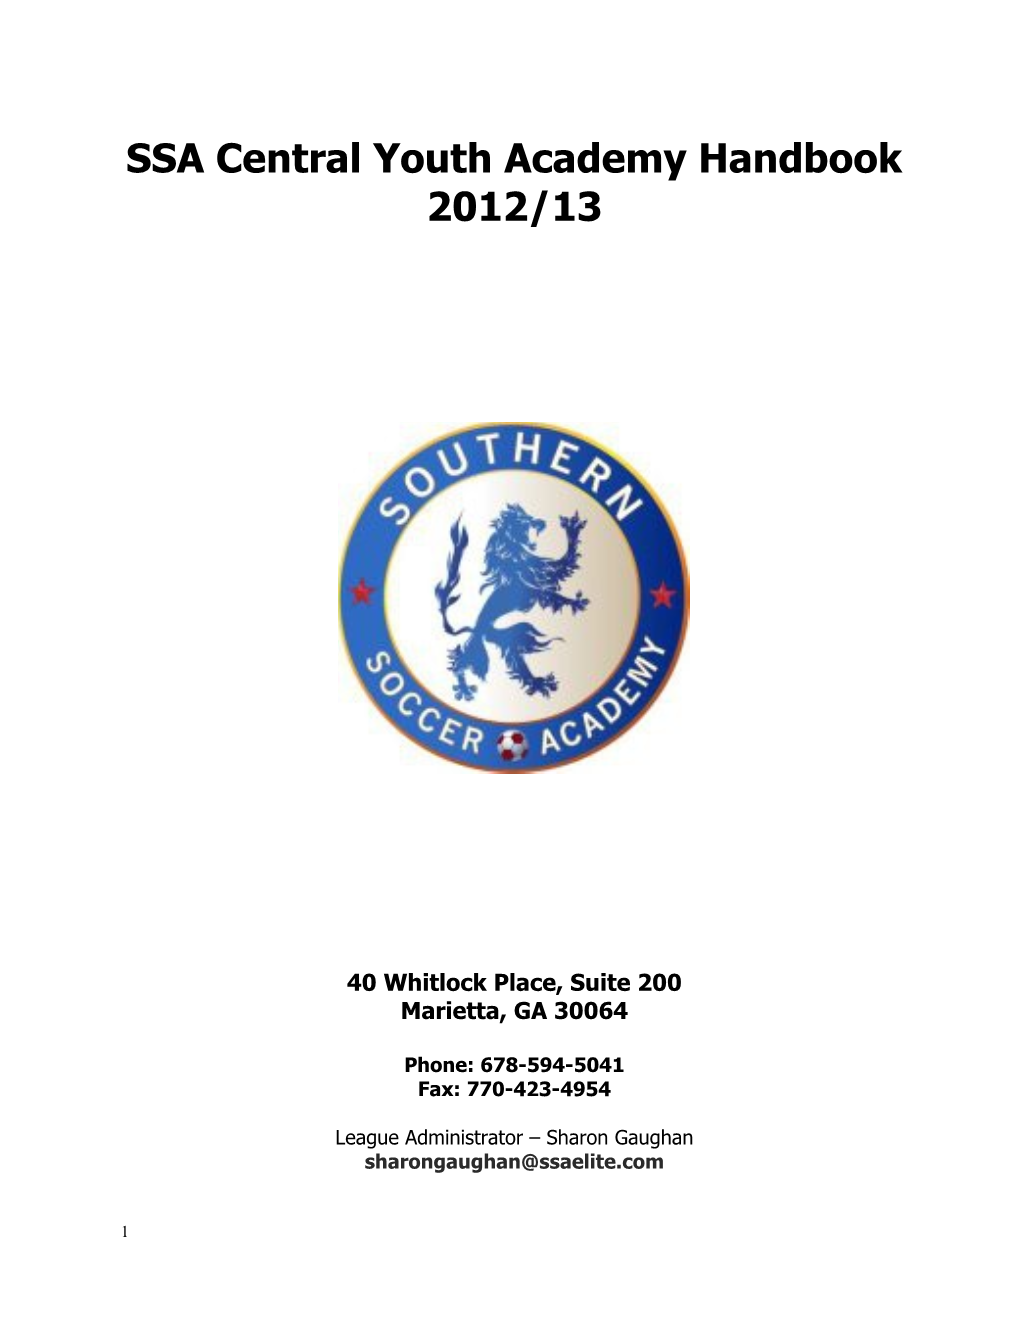 SSA Central Academy Handbook 2012/13